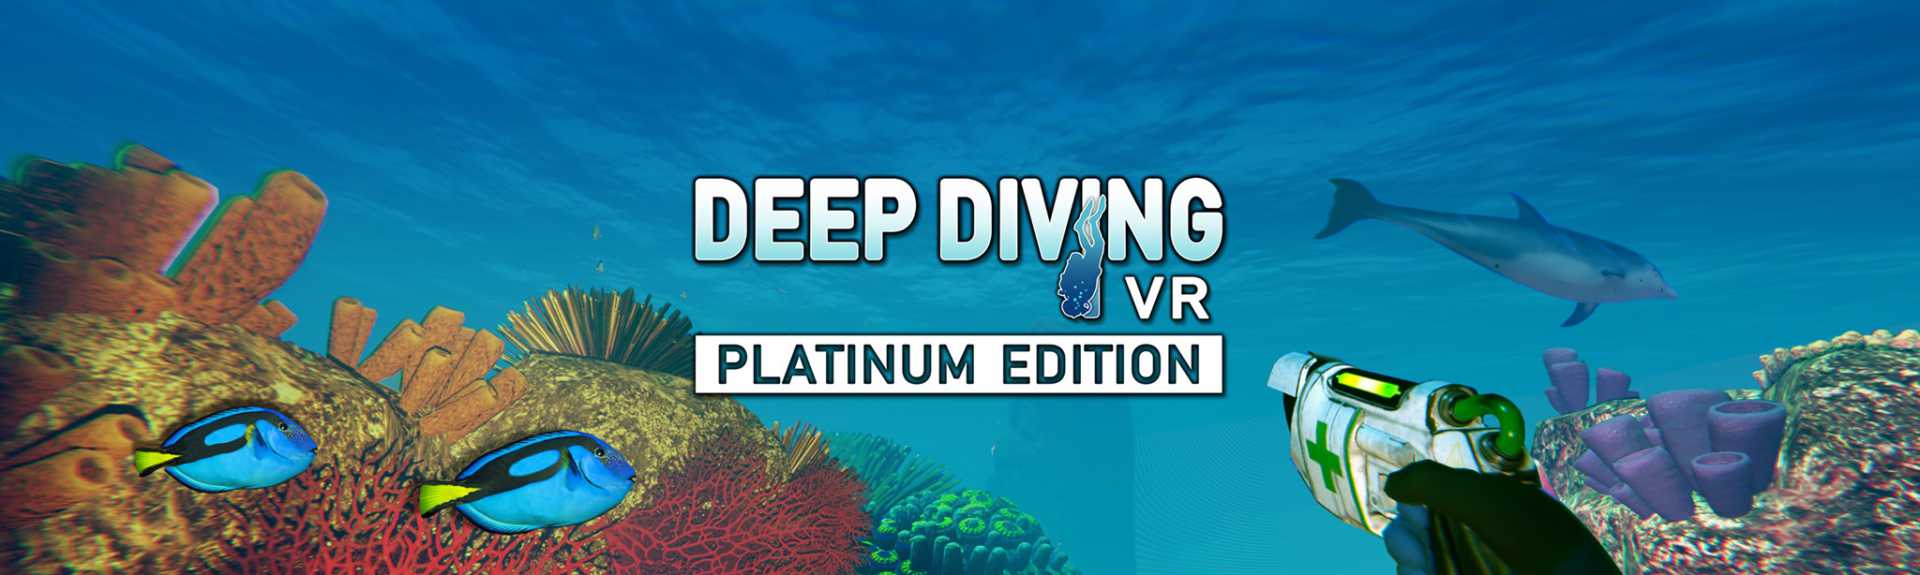 Deep Diving VR Platinum Edition